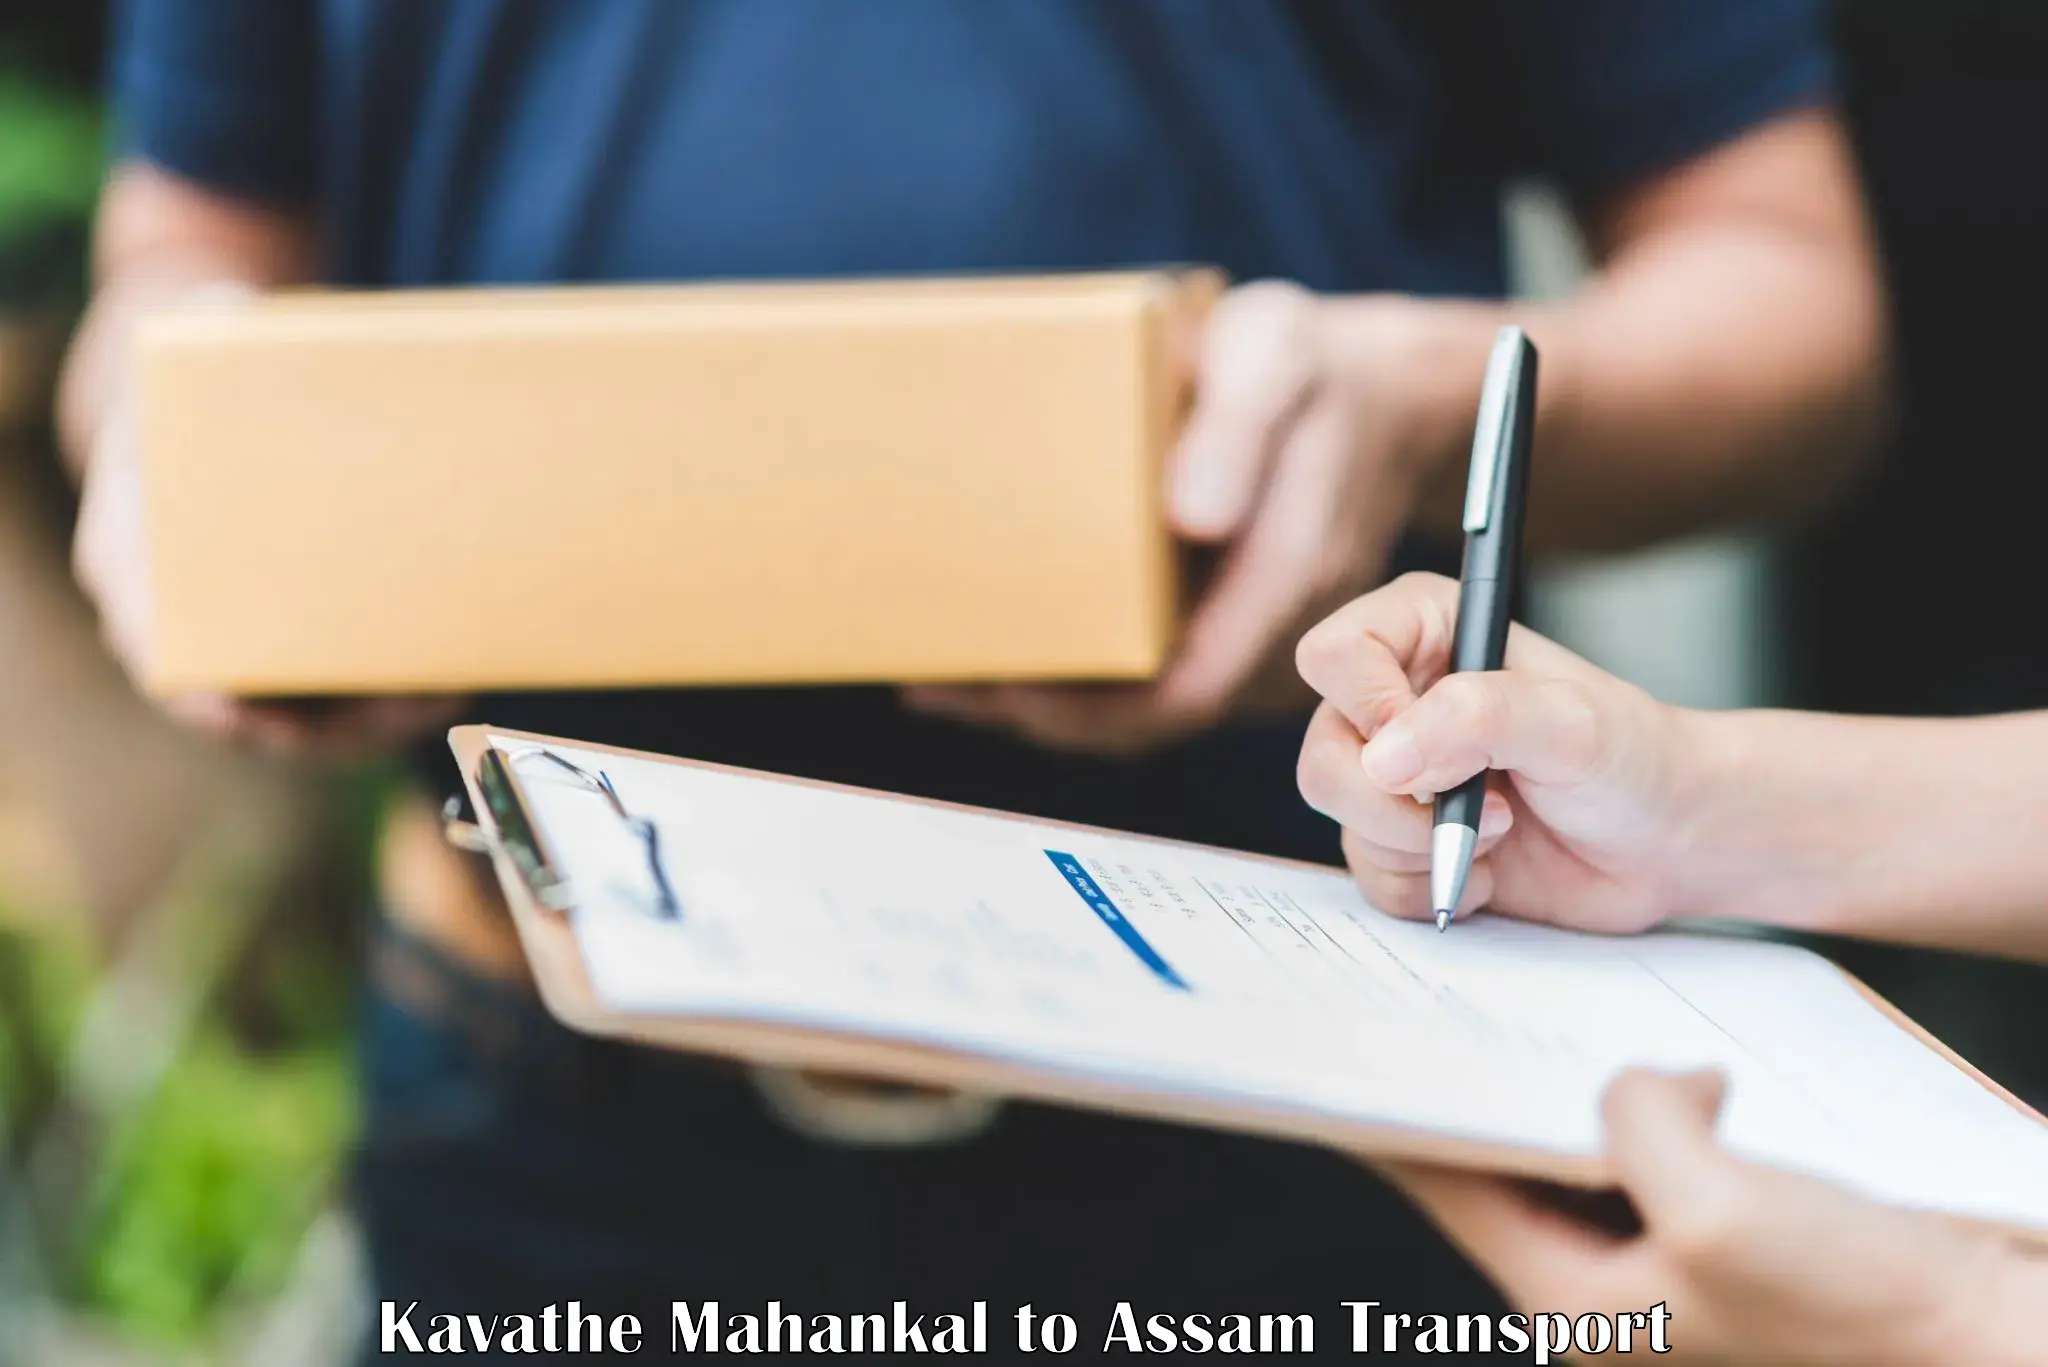 Domestic goods transportation services Kavathe Mahankal to Agomani